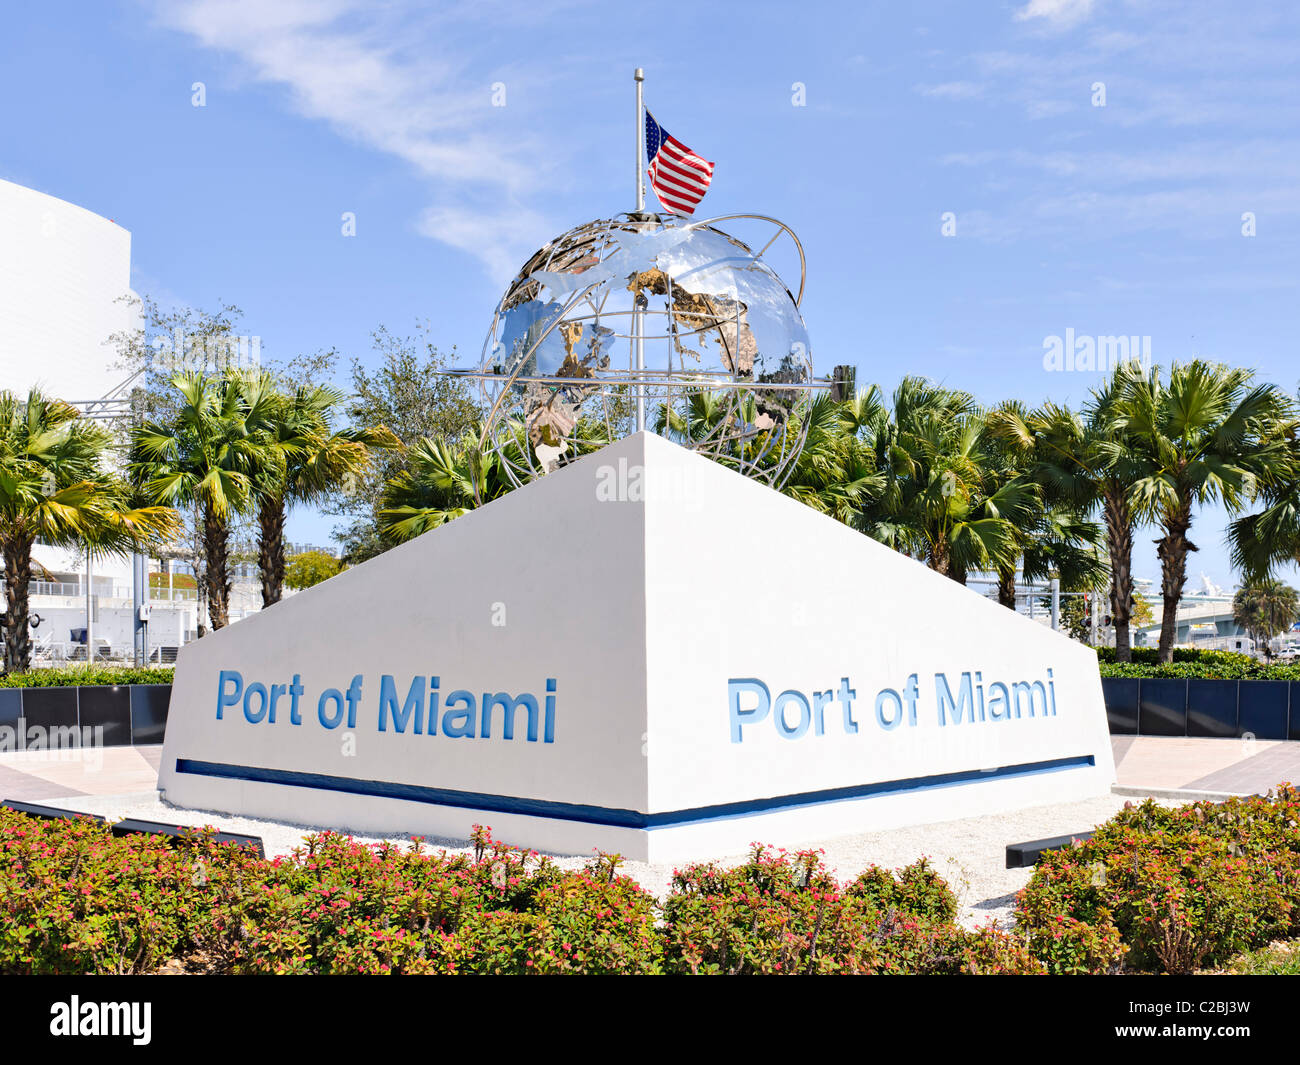 Port of Miami sign Stock Photo